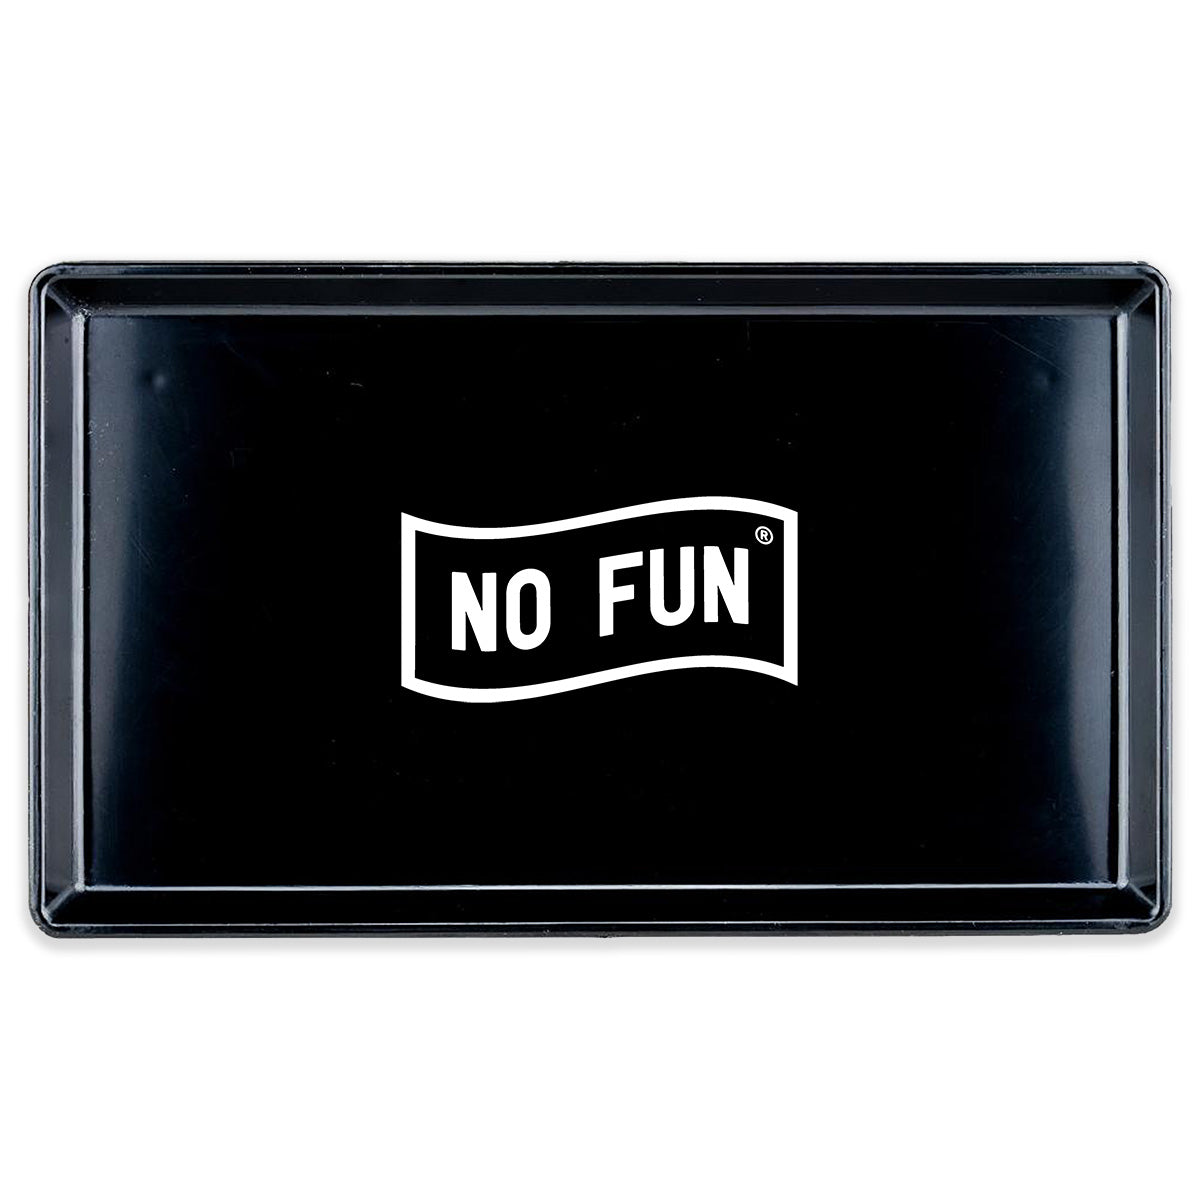 The No Fun® Multi-Purpose Tray.  Tray is black plastic, with a white "No Fun®" logo printed in the center.  